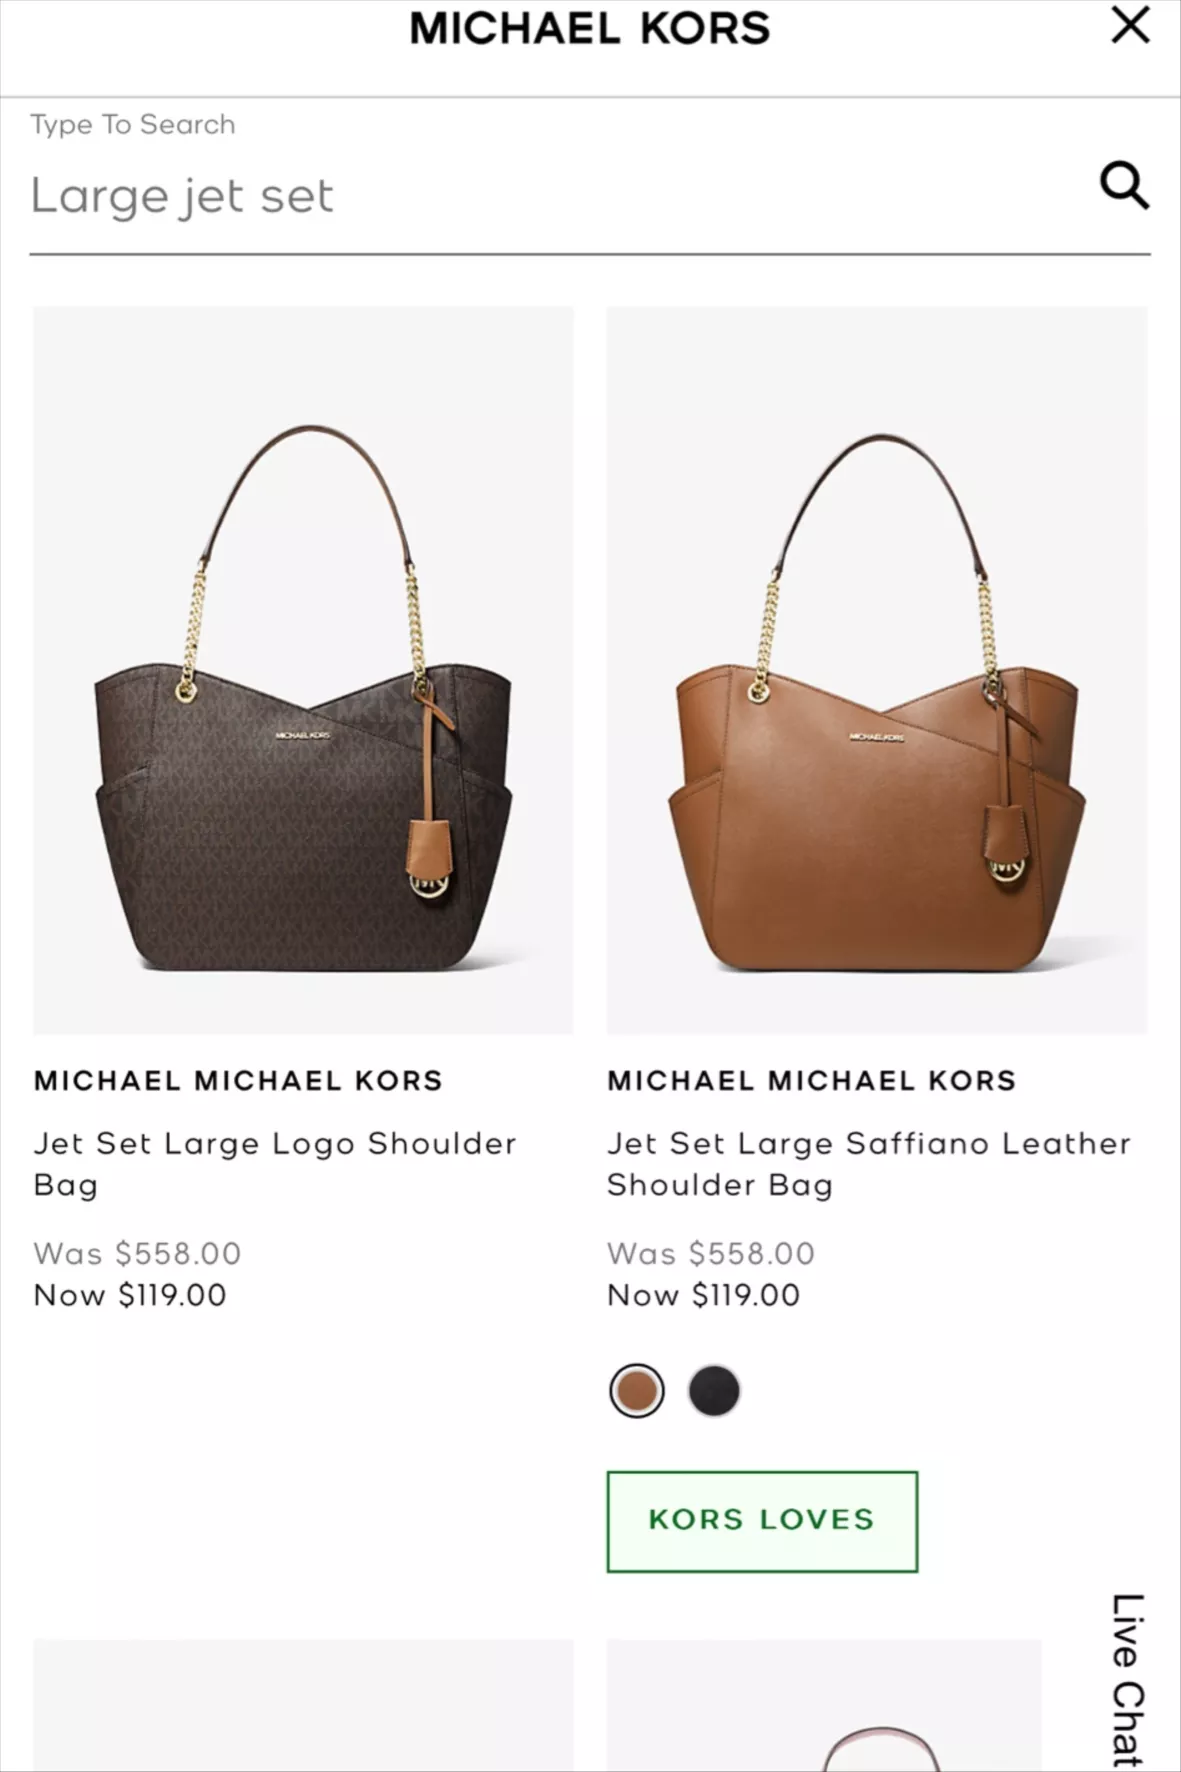 Michael Michael Kors Jet Set Large Saffiano Leather Shoulder Bag